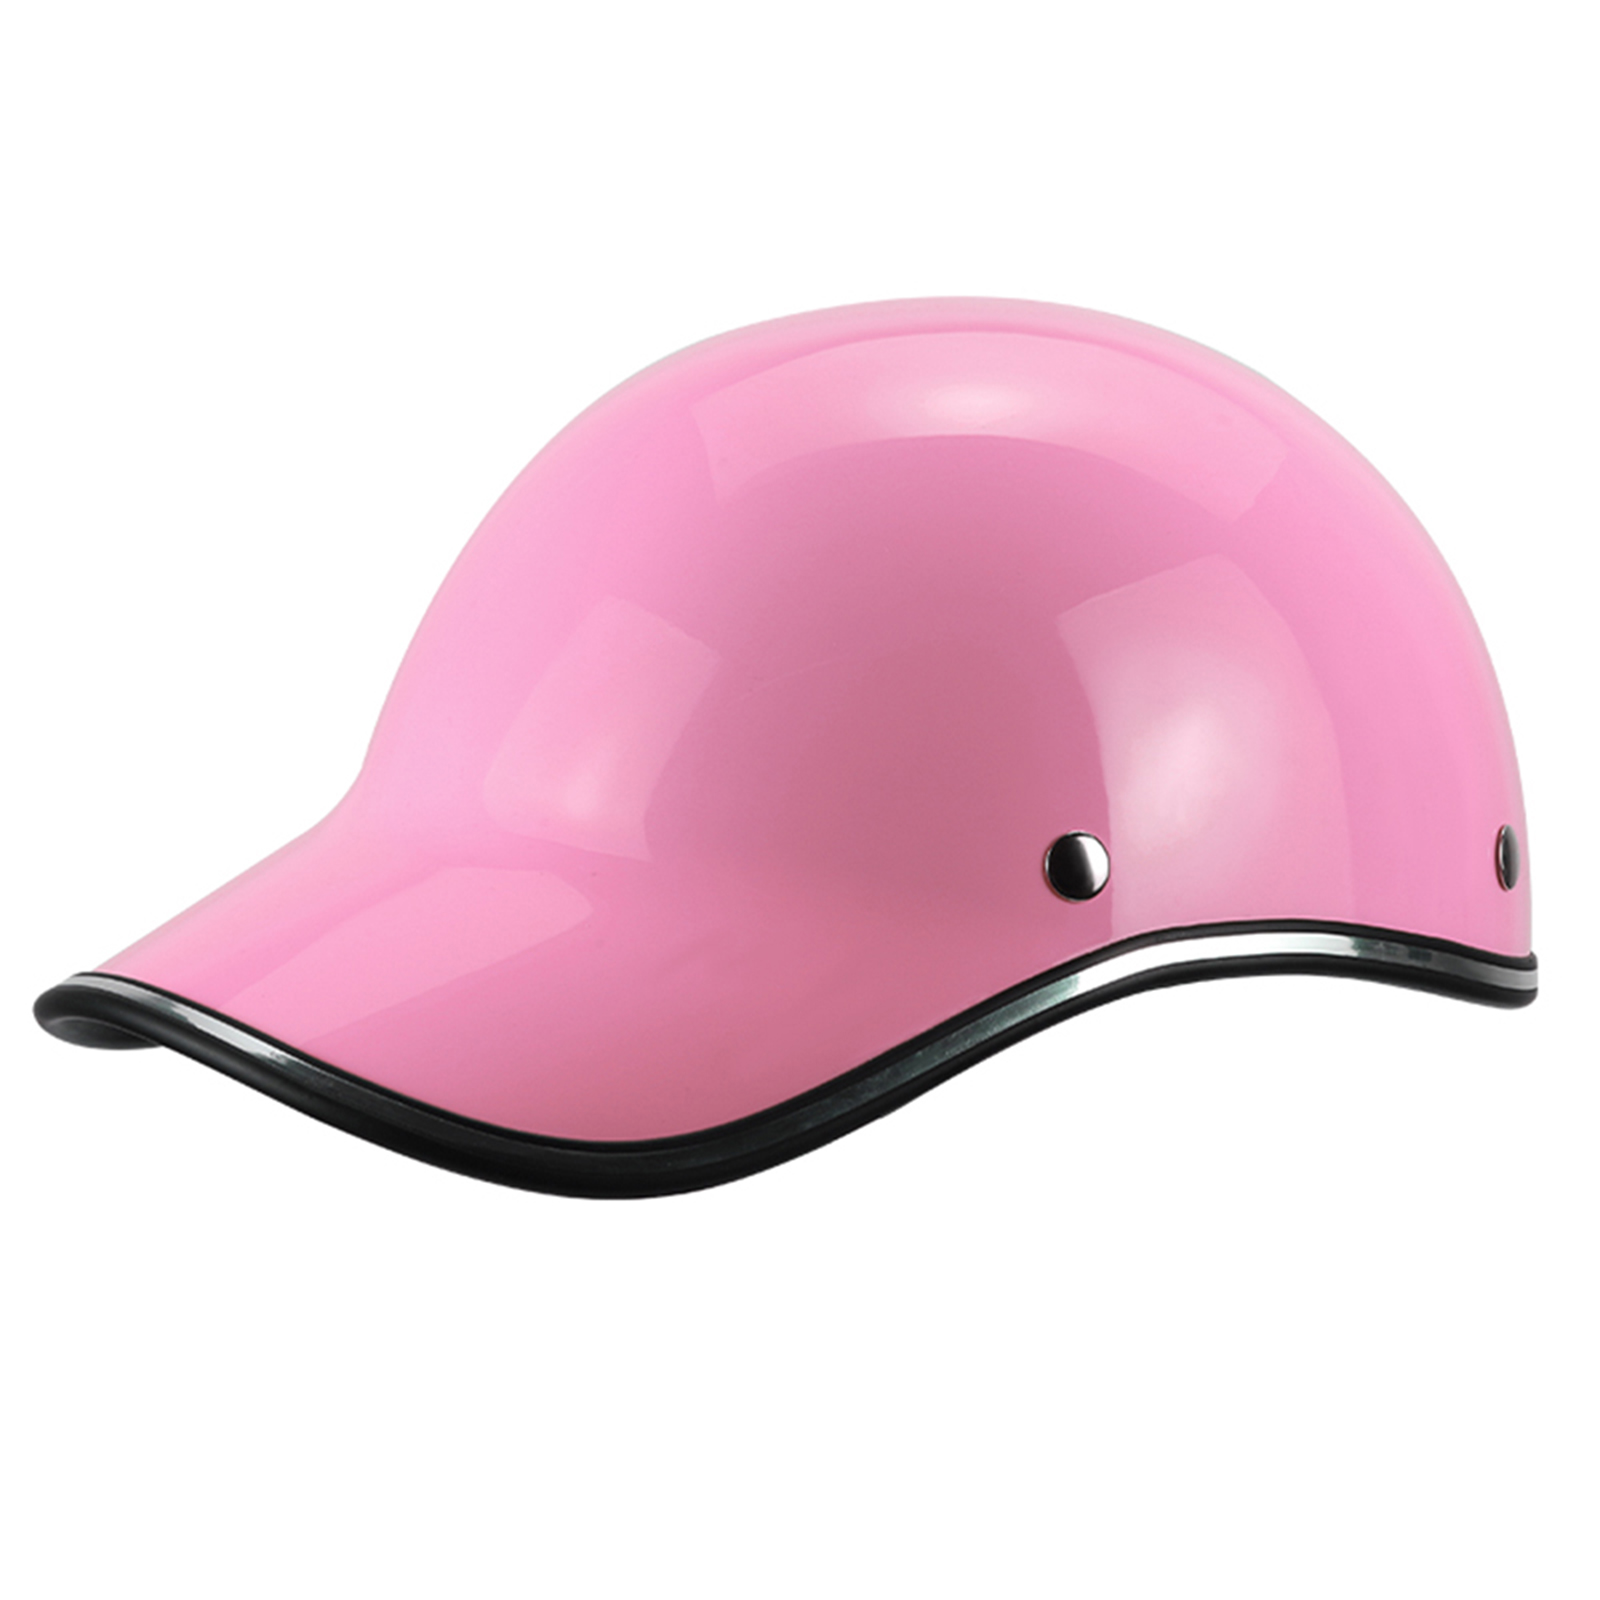 Unisex Baseball Cap Style Motorcycle Bike Safety Helmet Mtb Road Cycling Hat